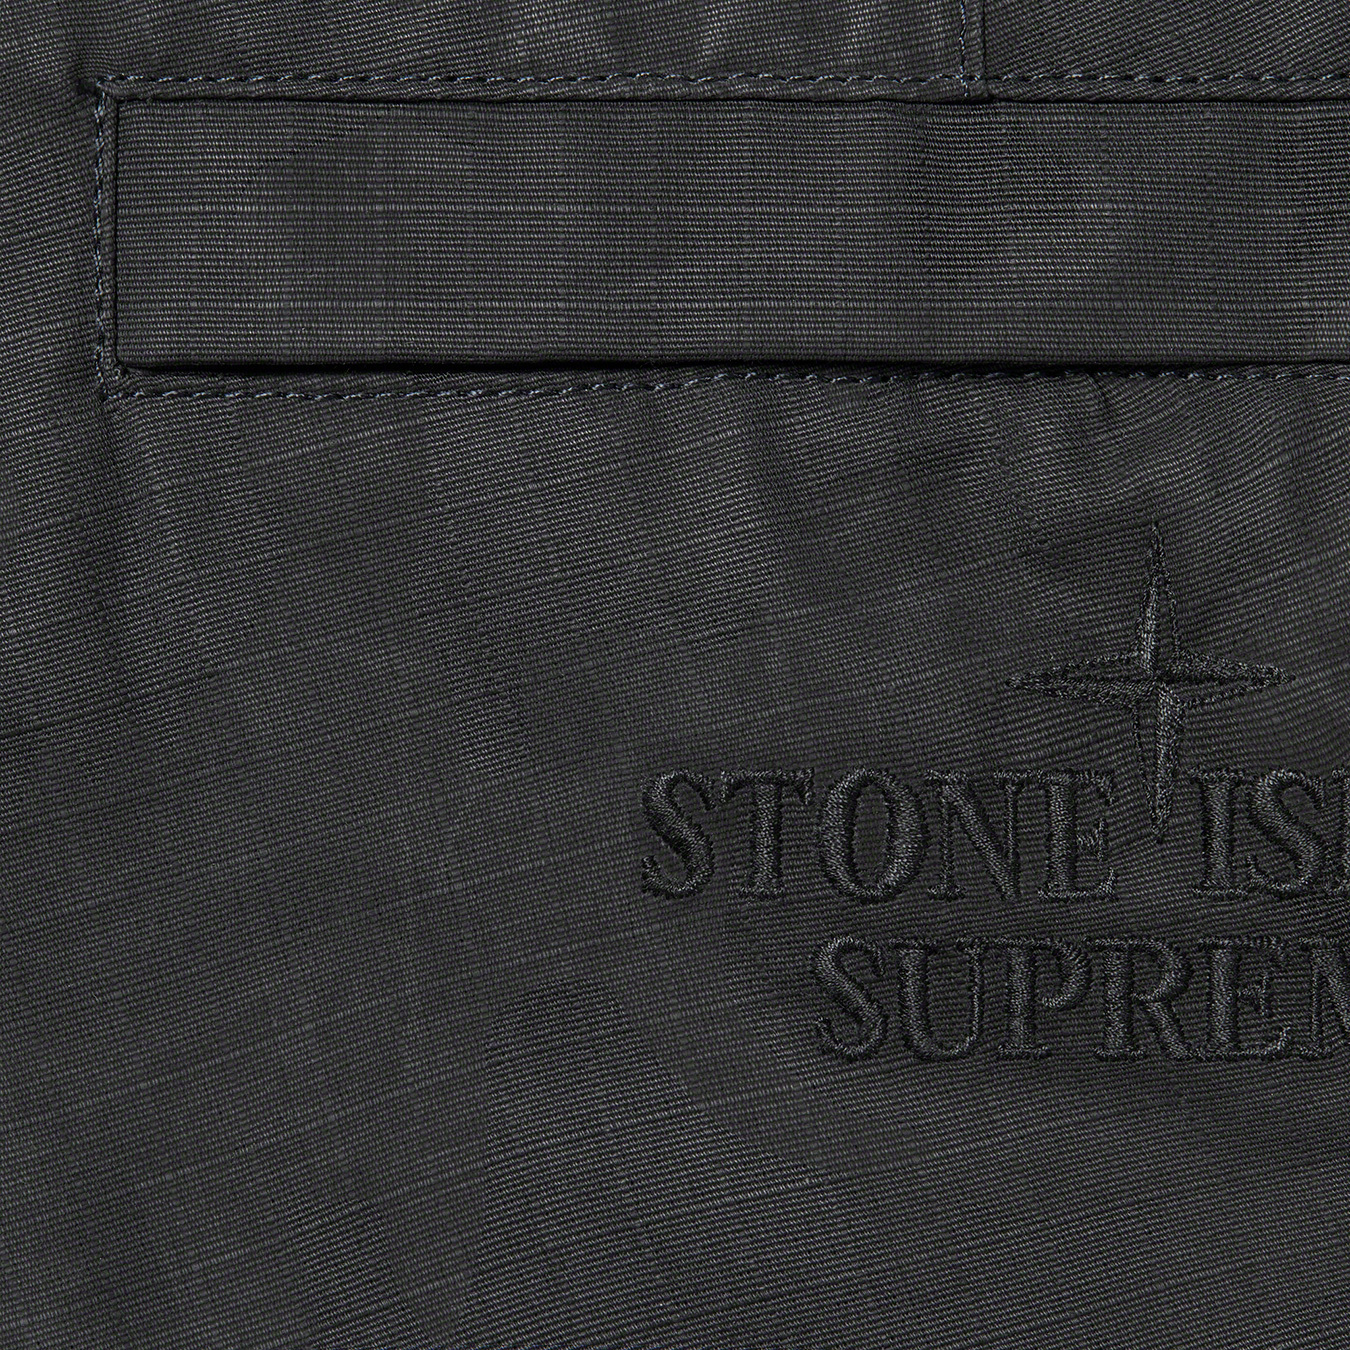 Supreme®/Stone Island® Reactive Ice Camo Ripstop Cargo Pant